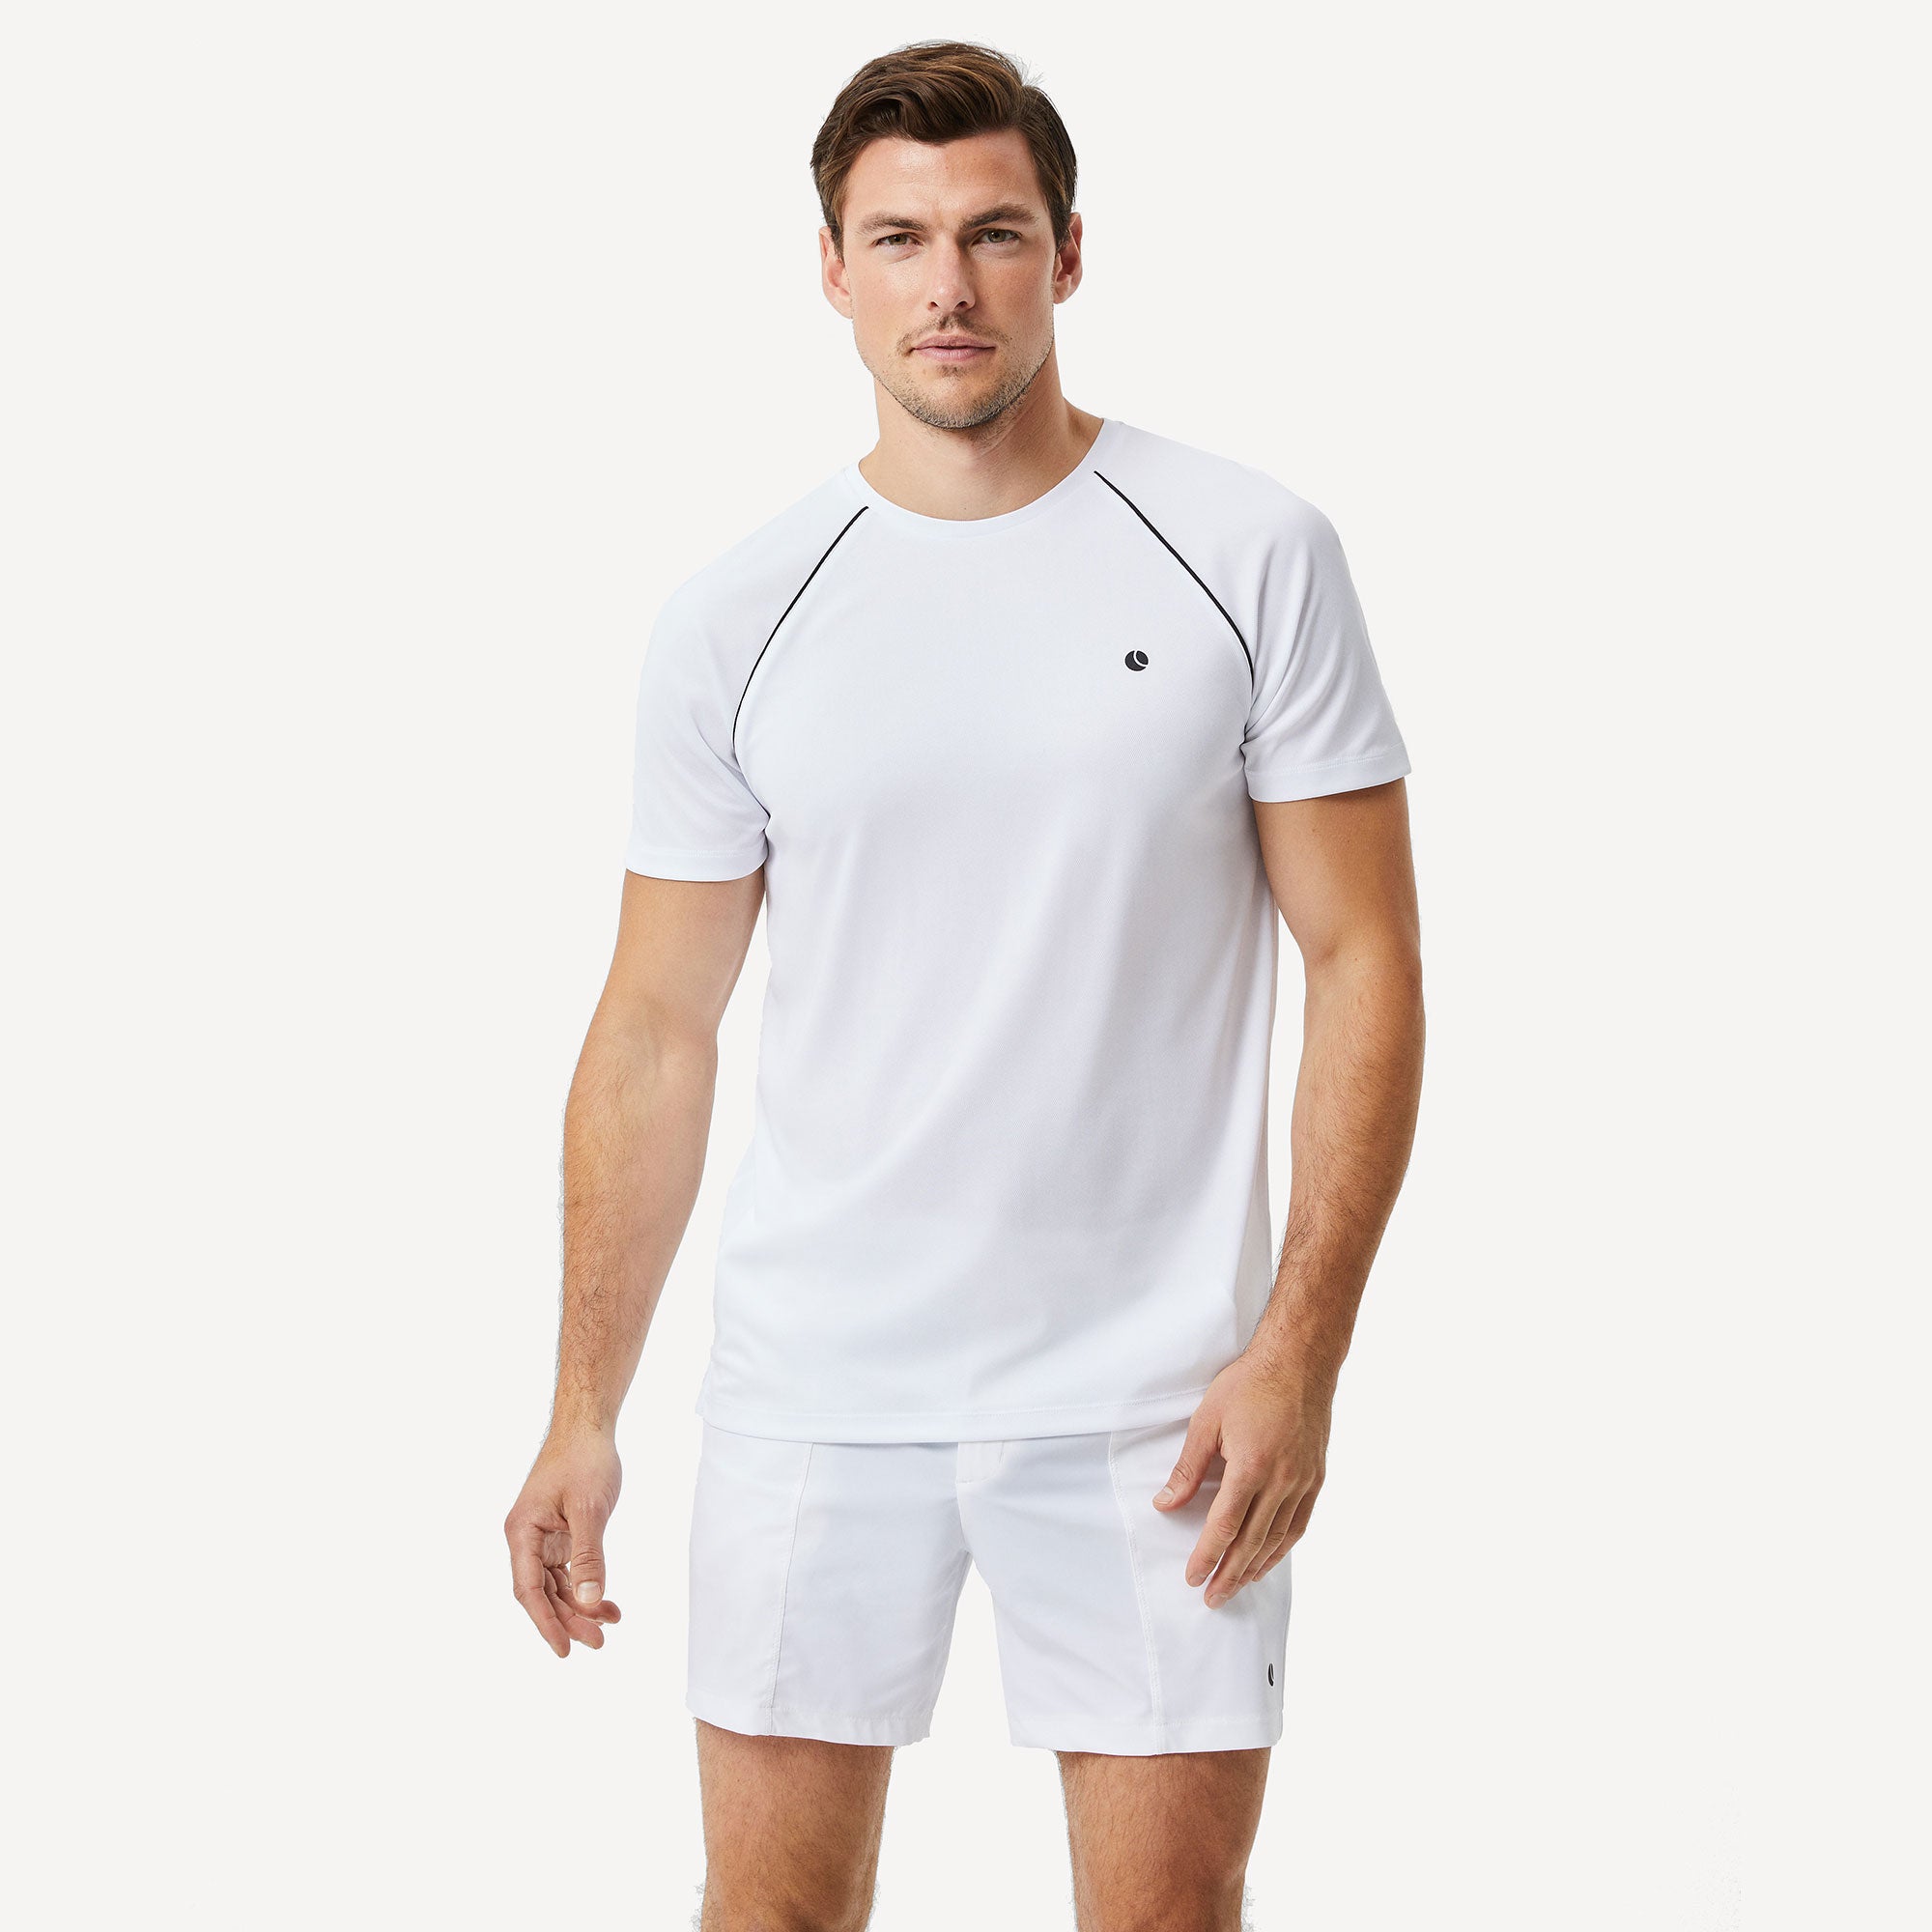 Björn Borg Ace Racquet Men's Tennis Shirt - White (1)